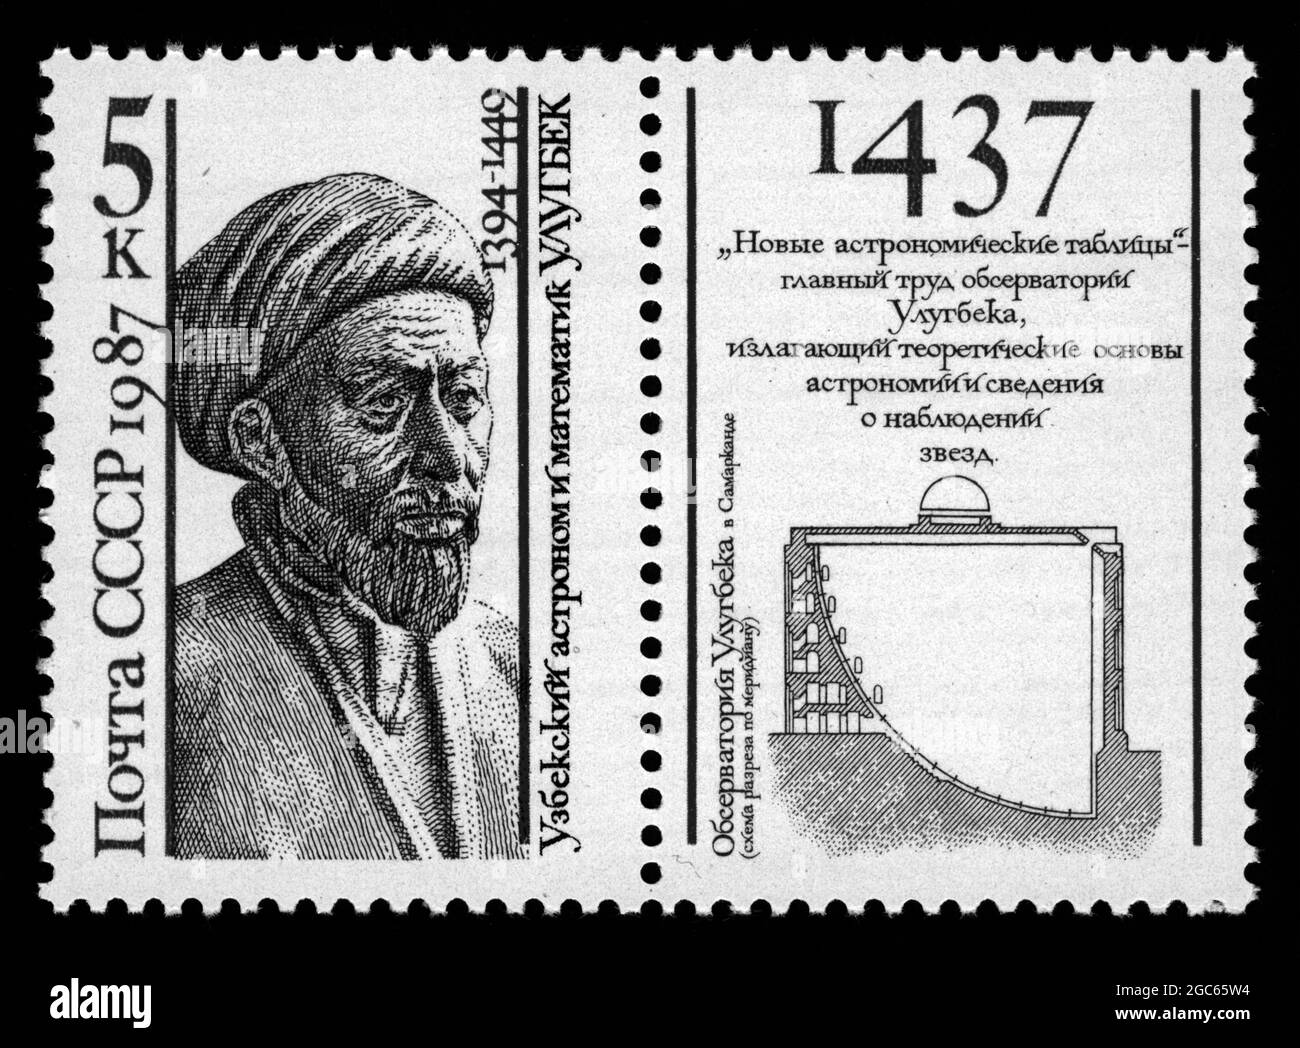 Stampa di francobolli in URSS,1987,Ulubek,matematico Foto Stock